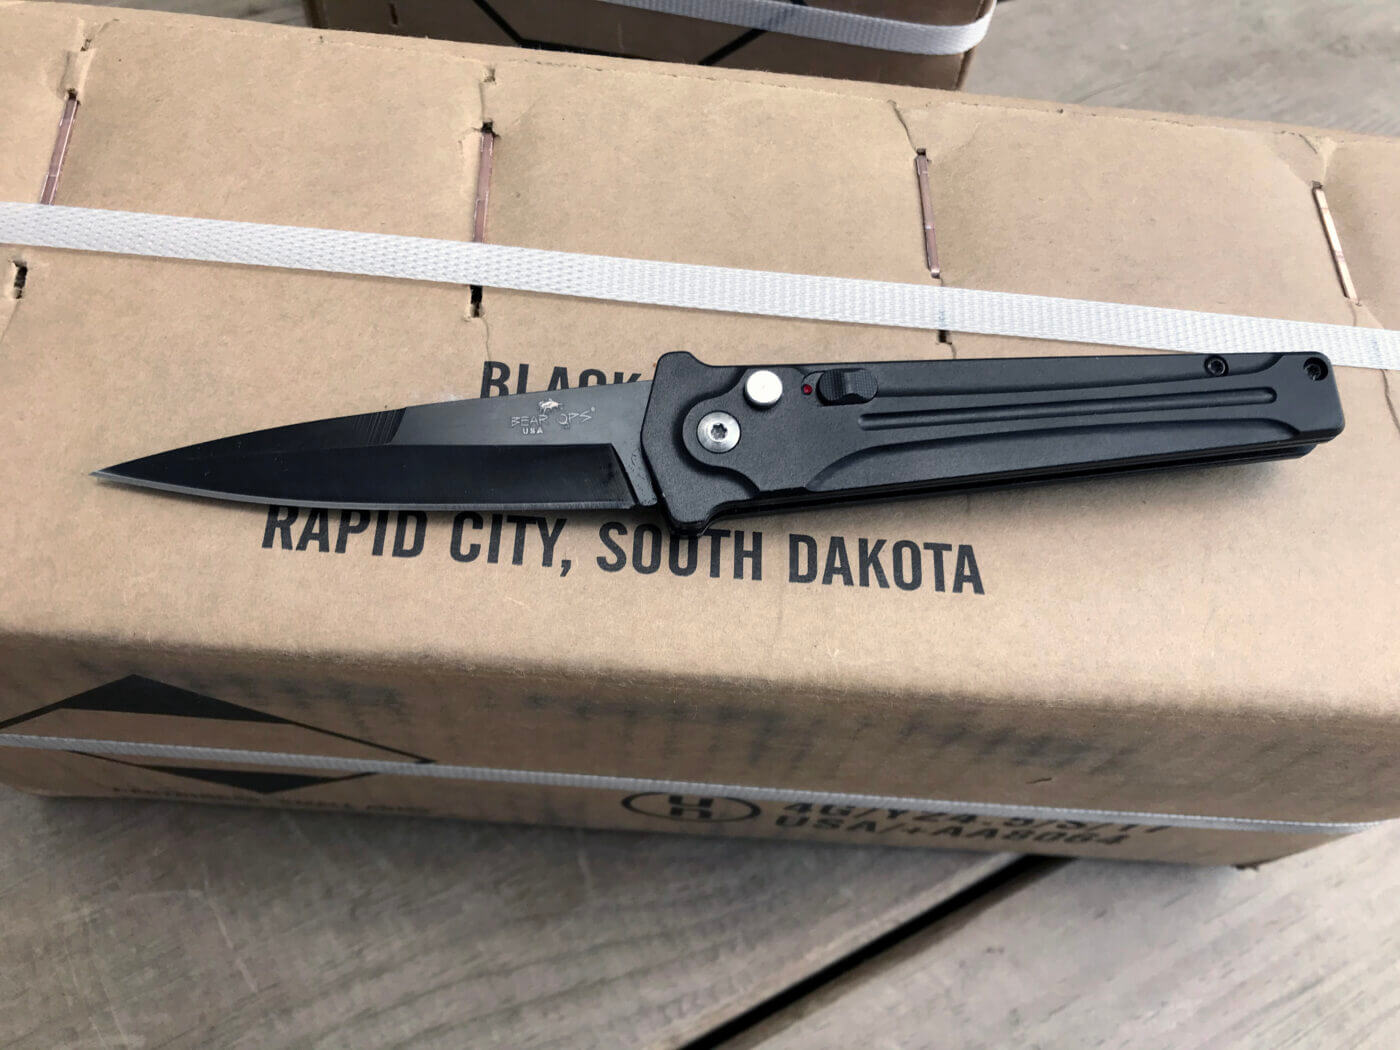 Knife blade on automatic knife